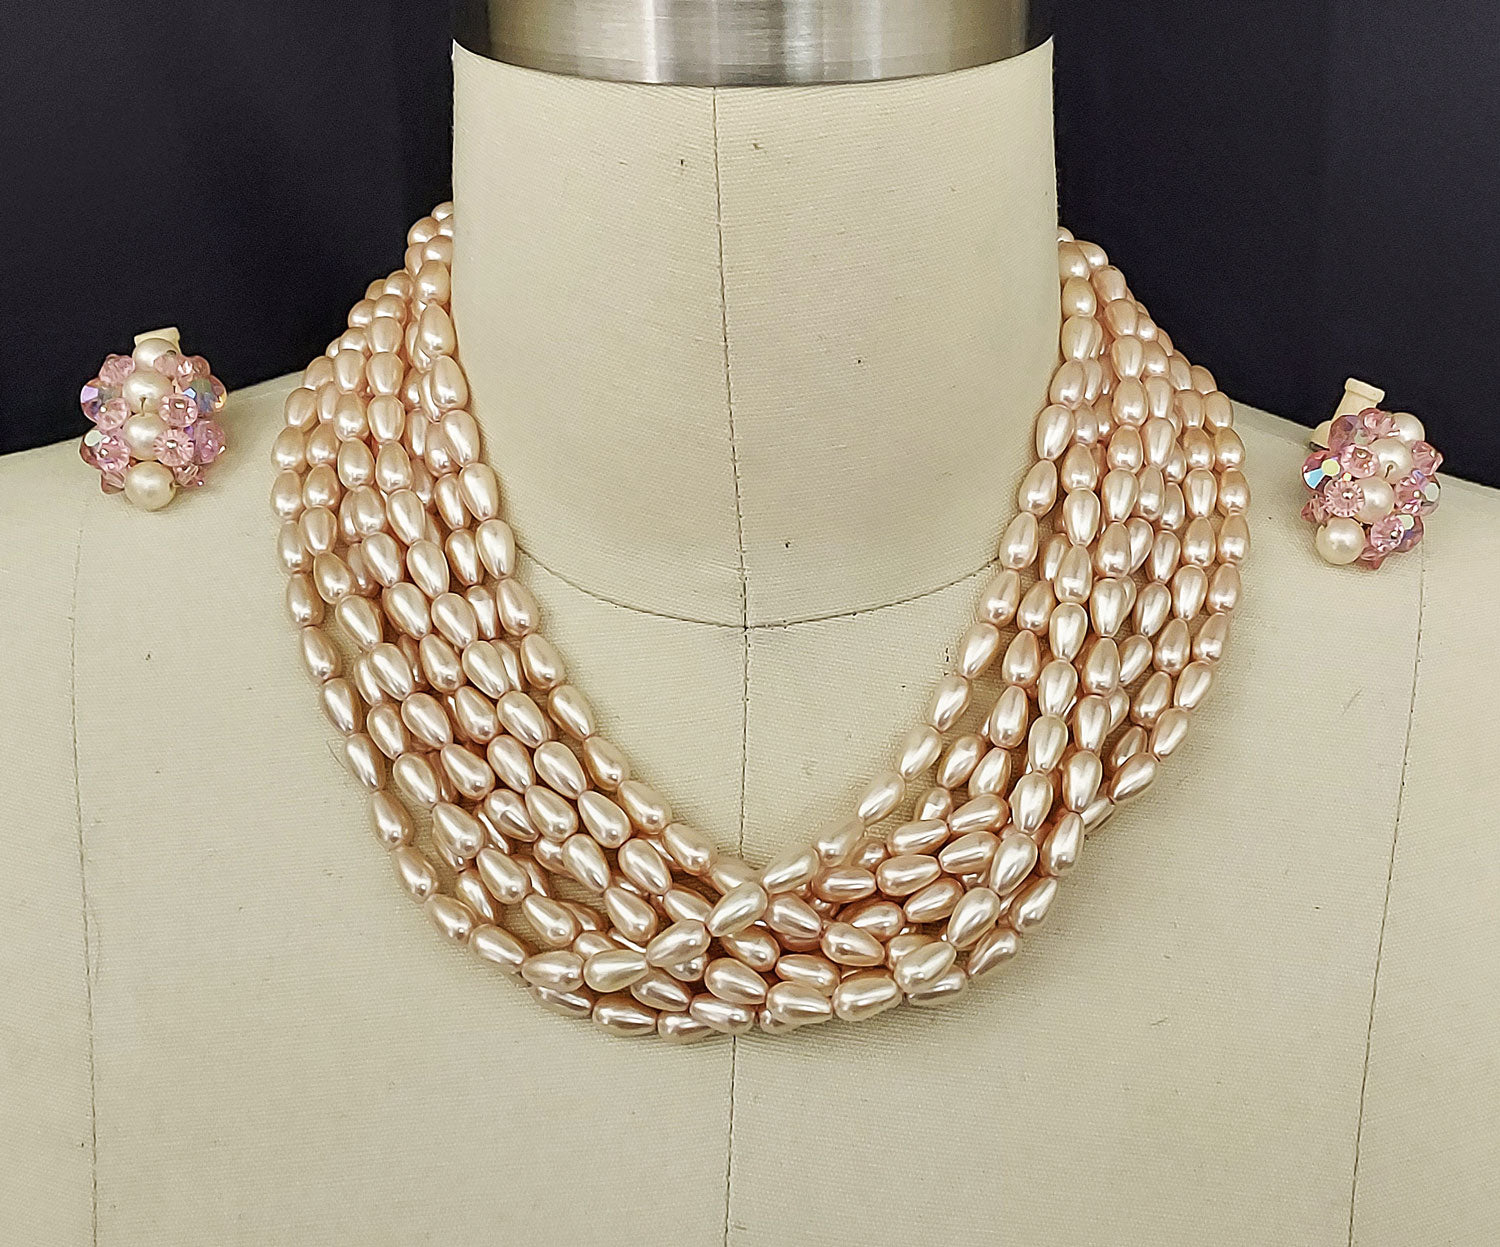 Pearl Necklace and Bracelet Set, Vintage Faux Pearls, Blue, Grey